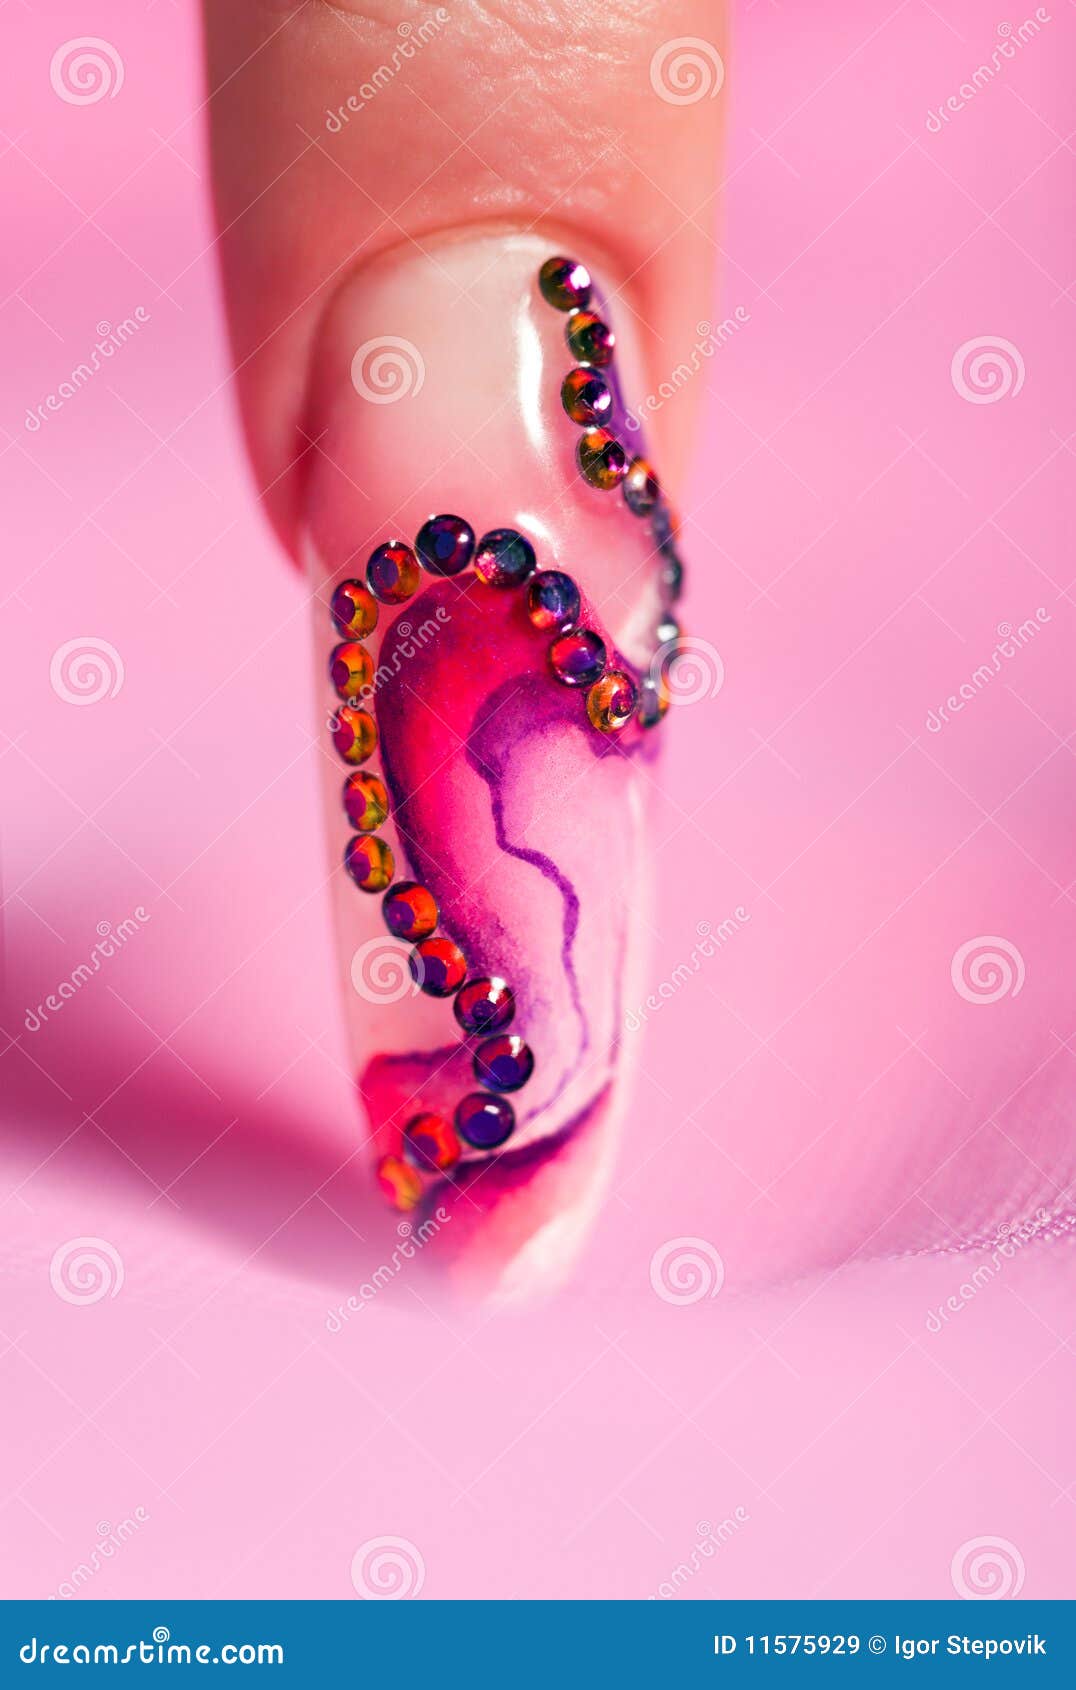 human finger with long fingernail over pink